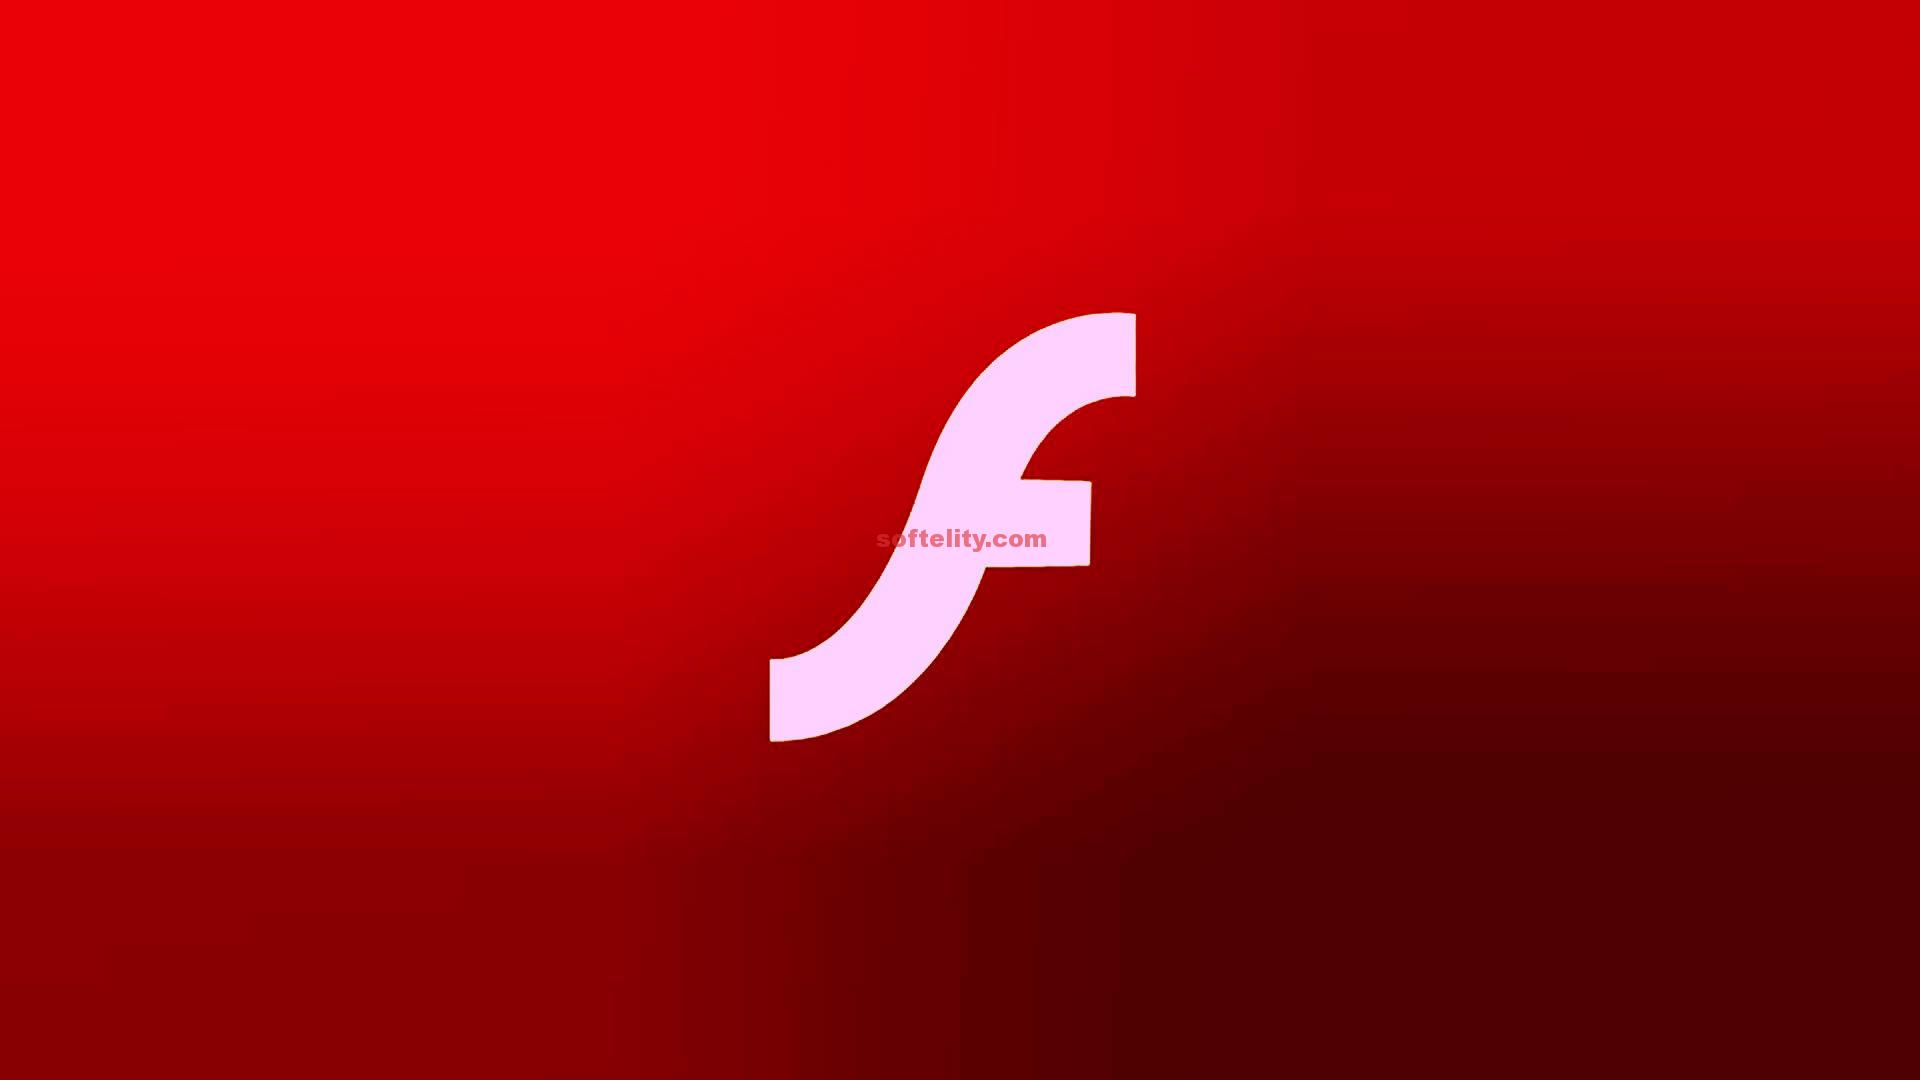 adobe flash player 10.3 for mac free download